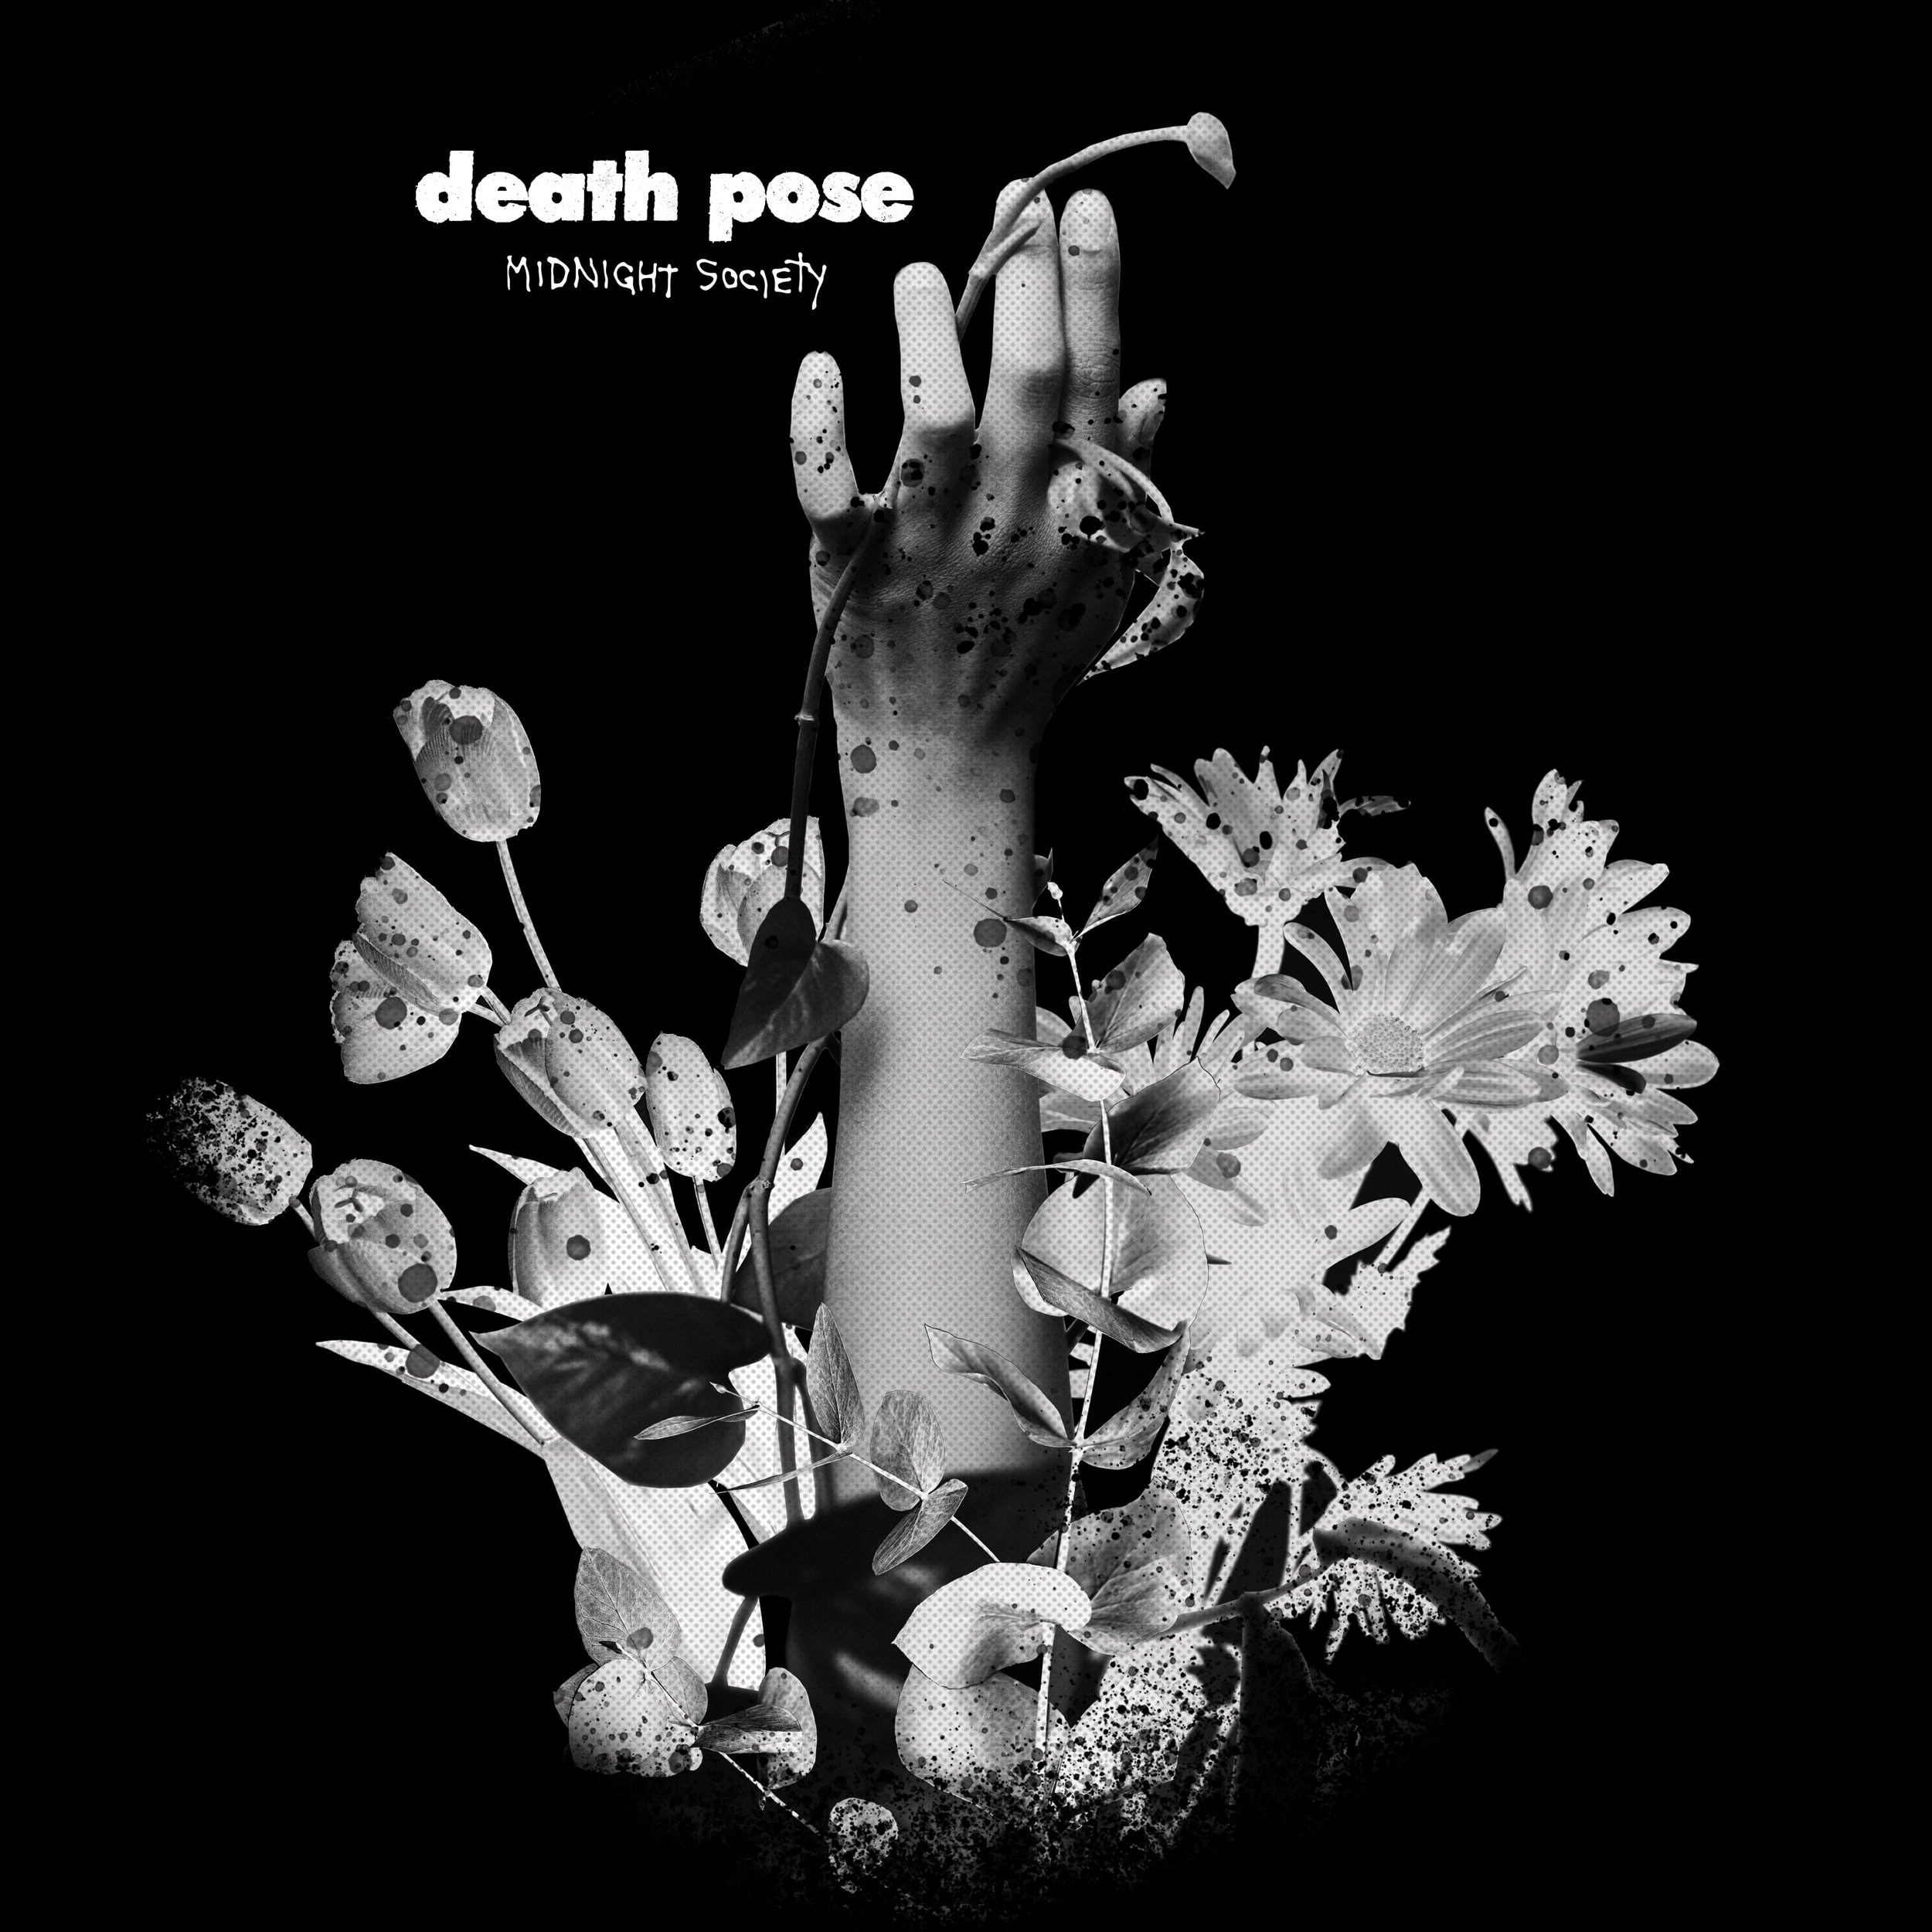 death pose - midnight society - cover.jpg